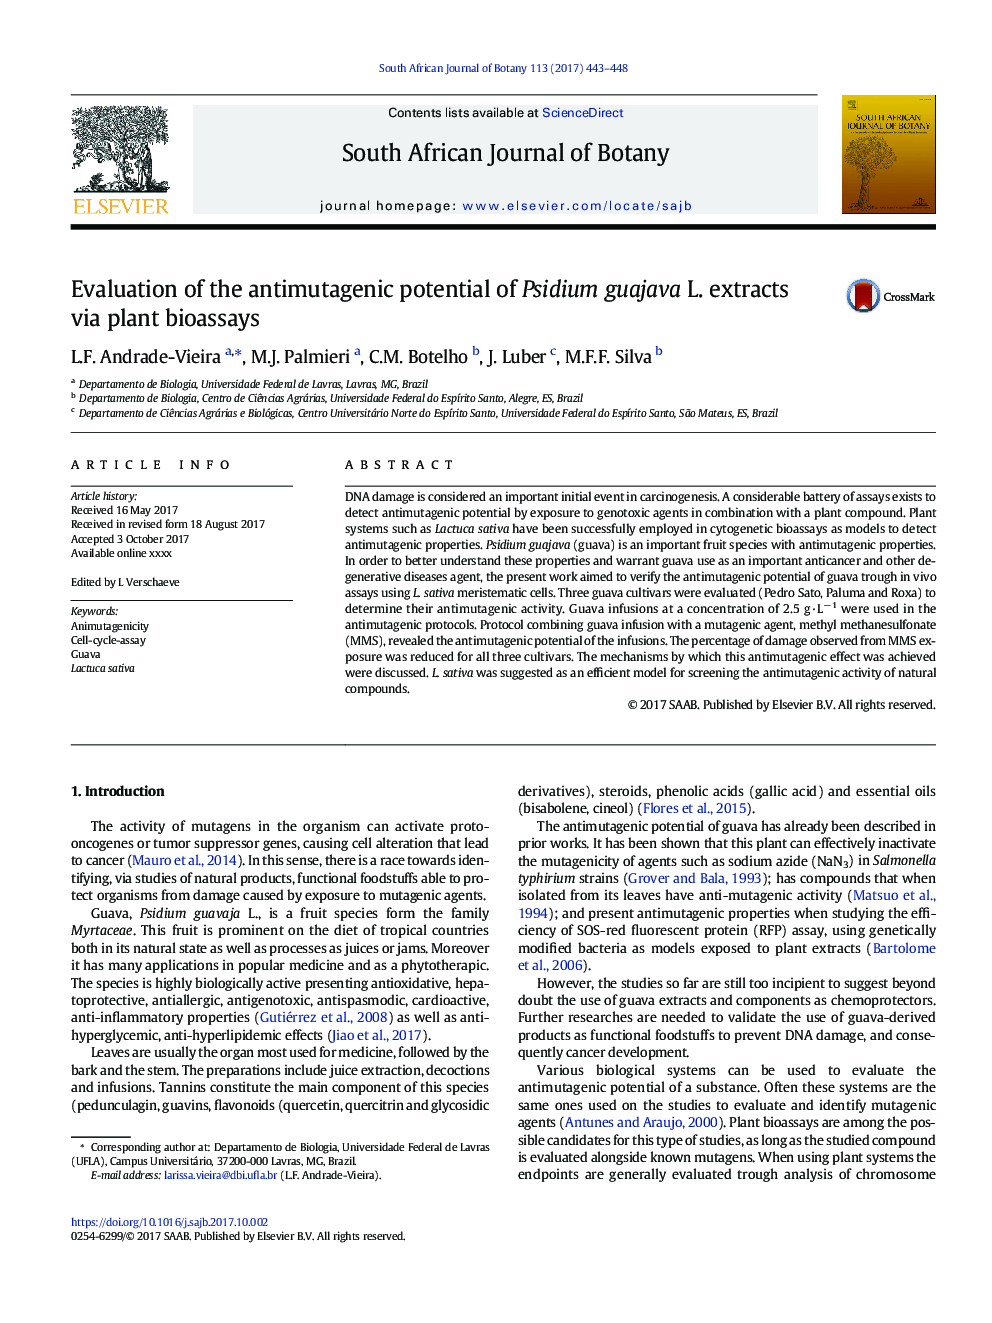 Evaluation of the antimutagenic potential of Psidium guajava L. extracts via plant bioassays